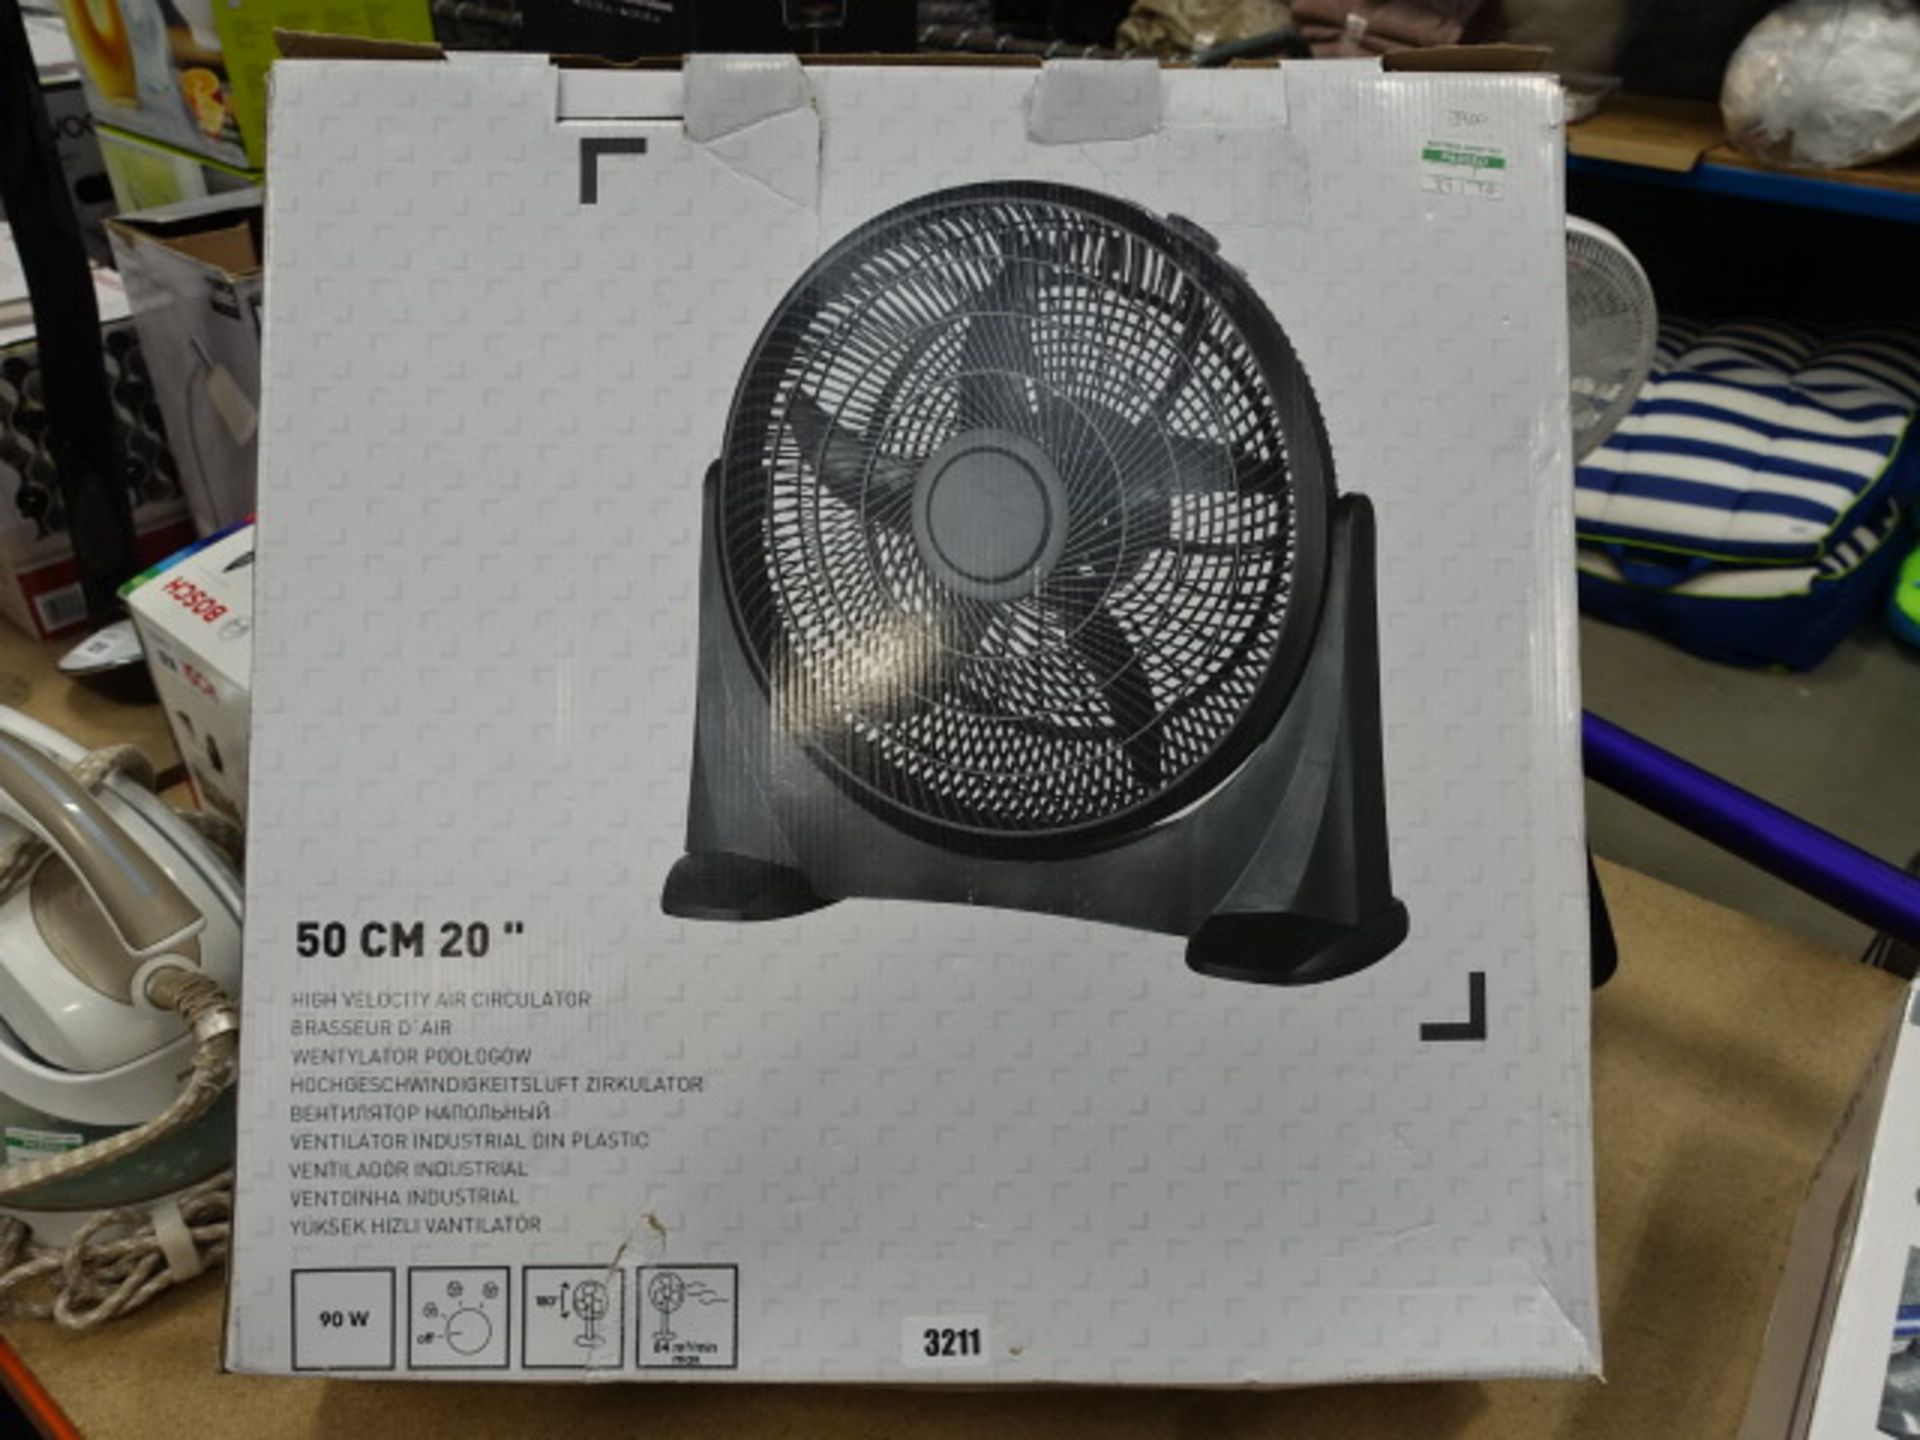 20'' High Velocity air circulator fan